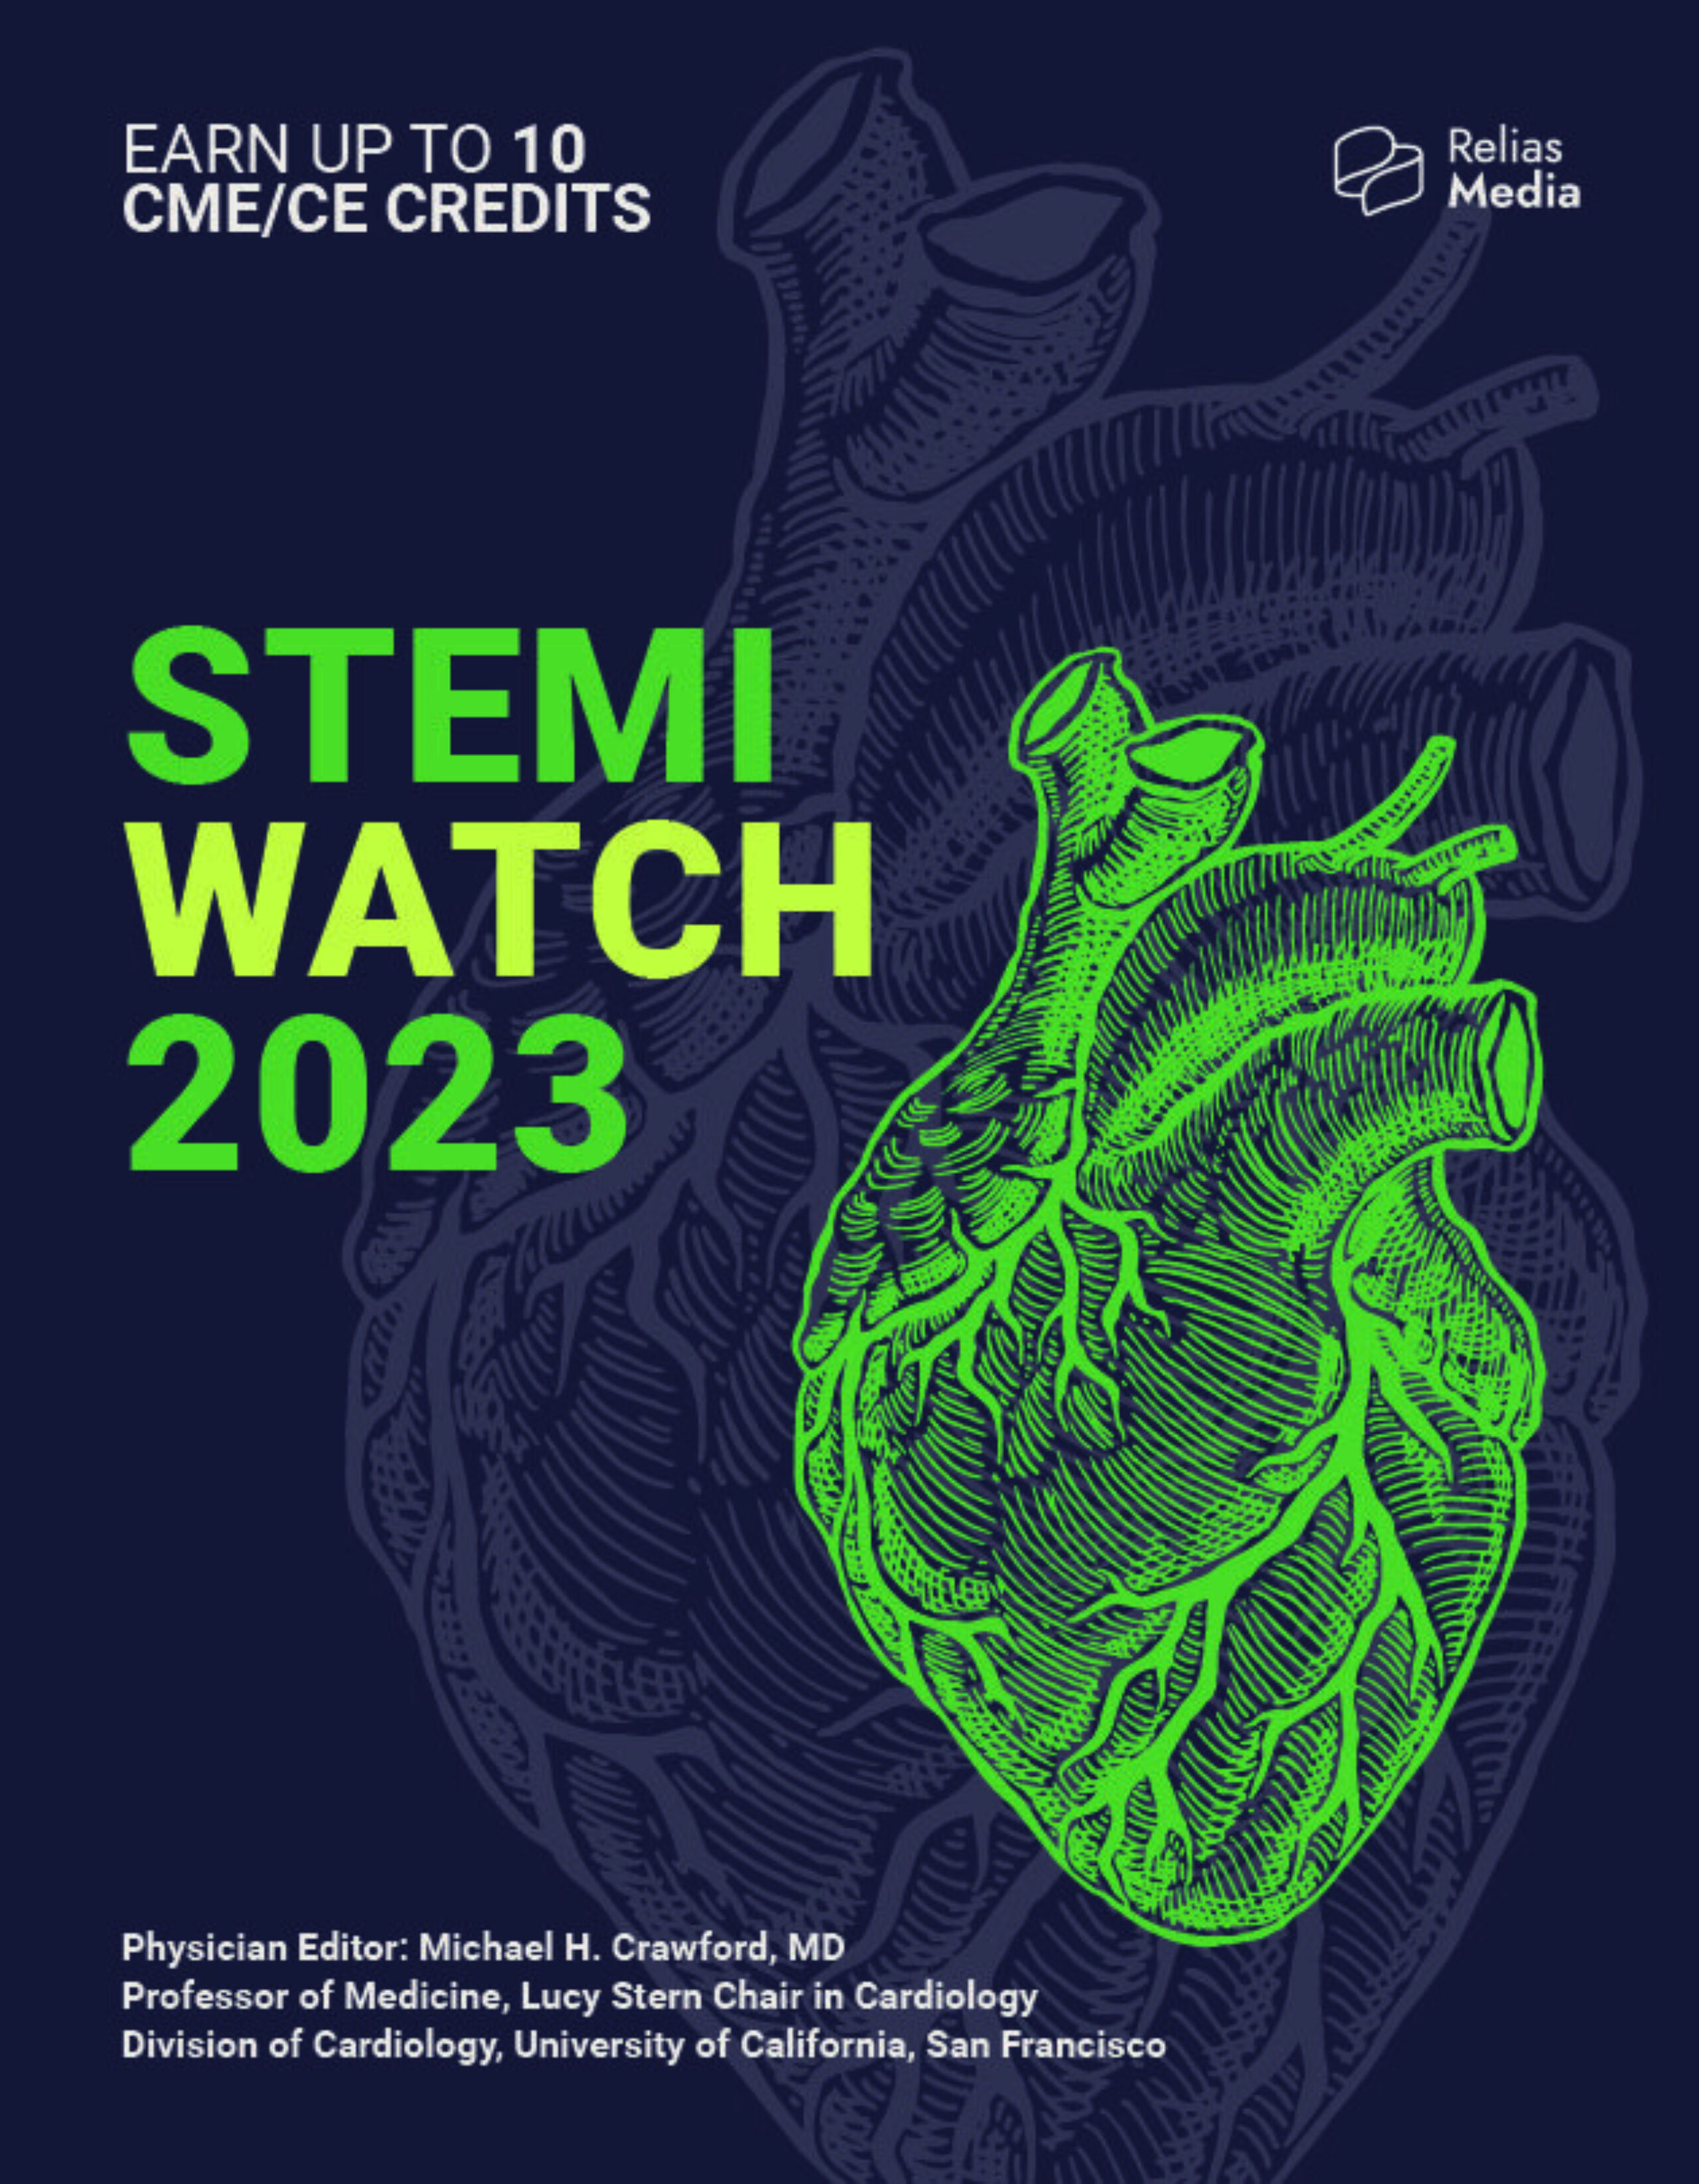 STEMI Watch 2023 Relias Media